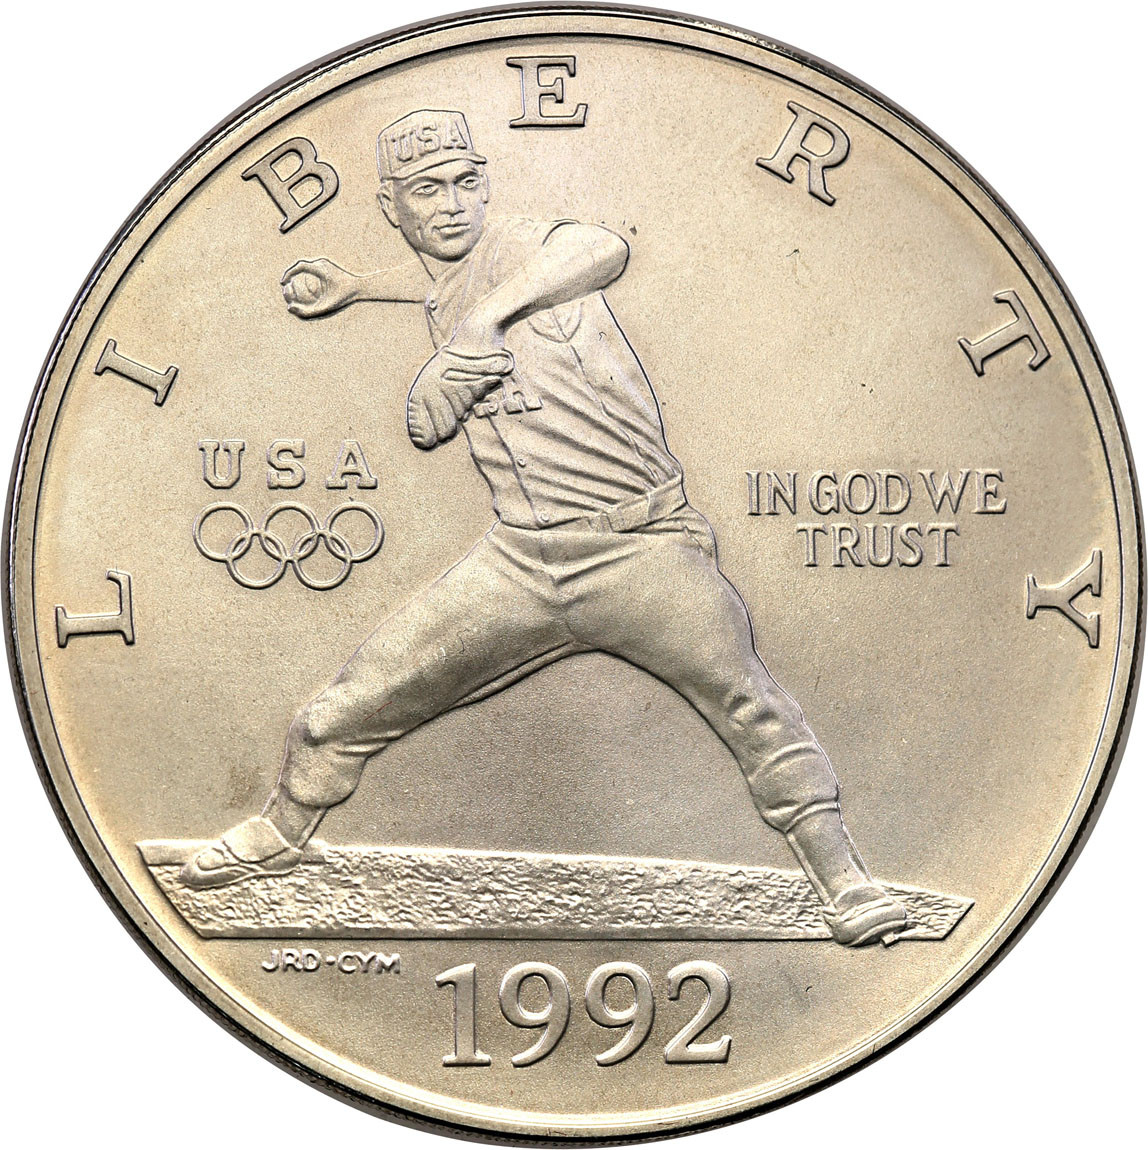 USA. Dolar 1992, D Igrzyska Olimpijskie - Albertville